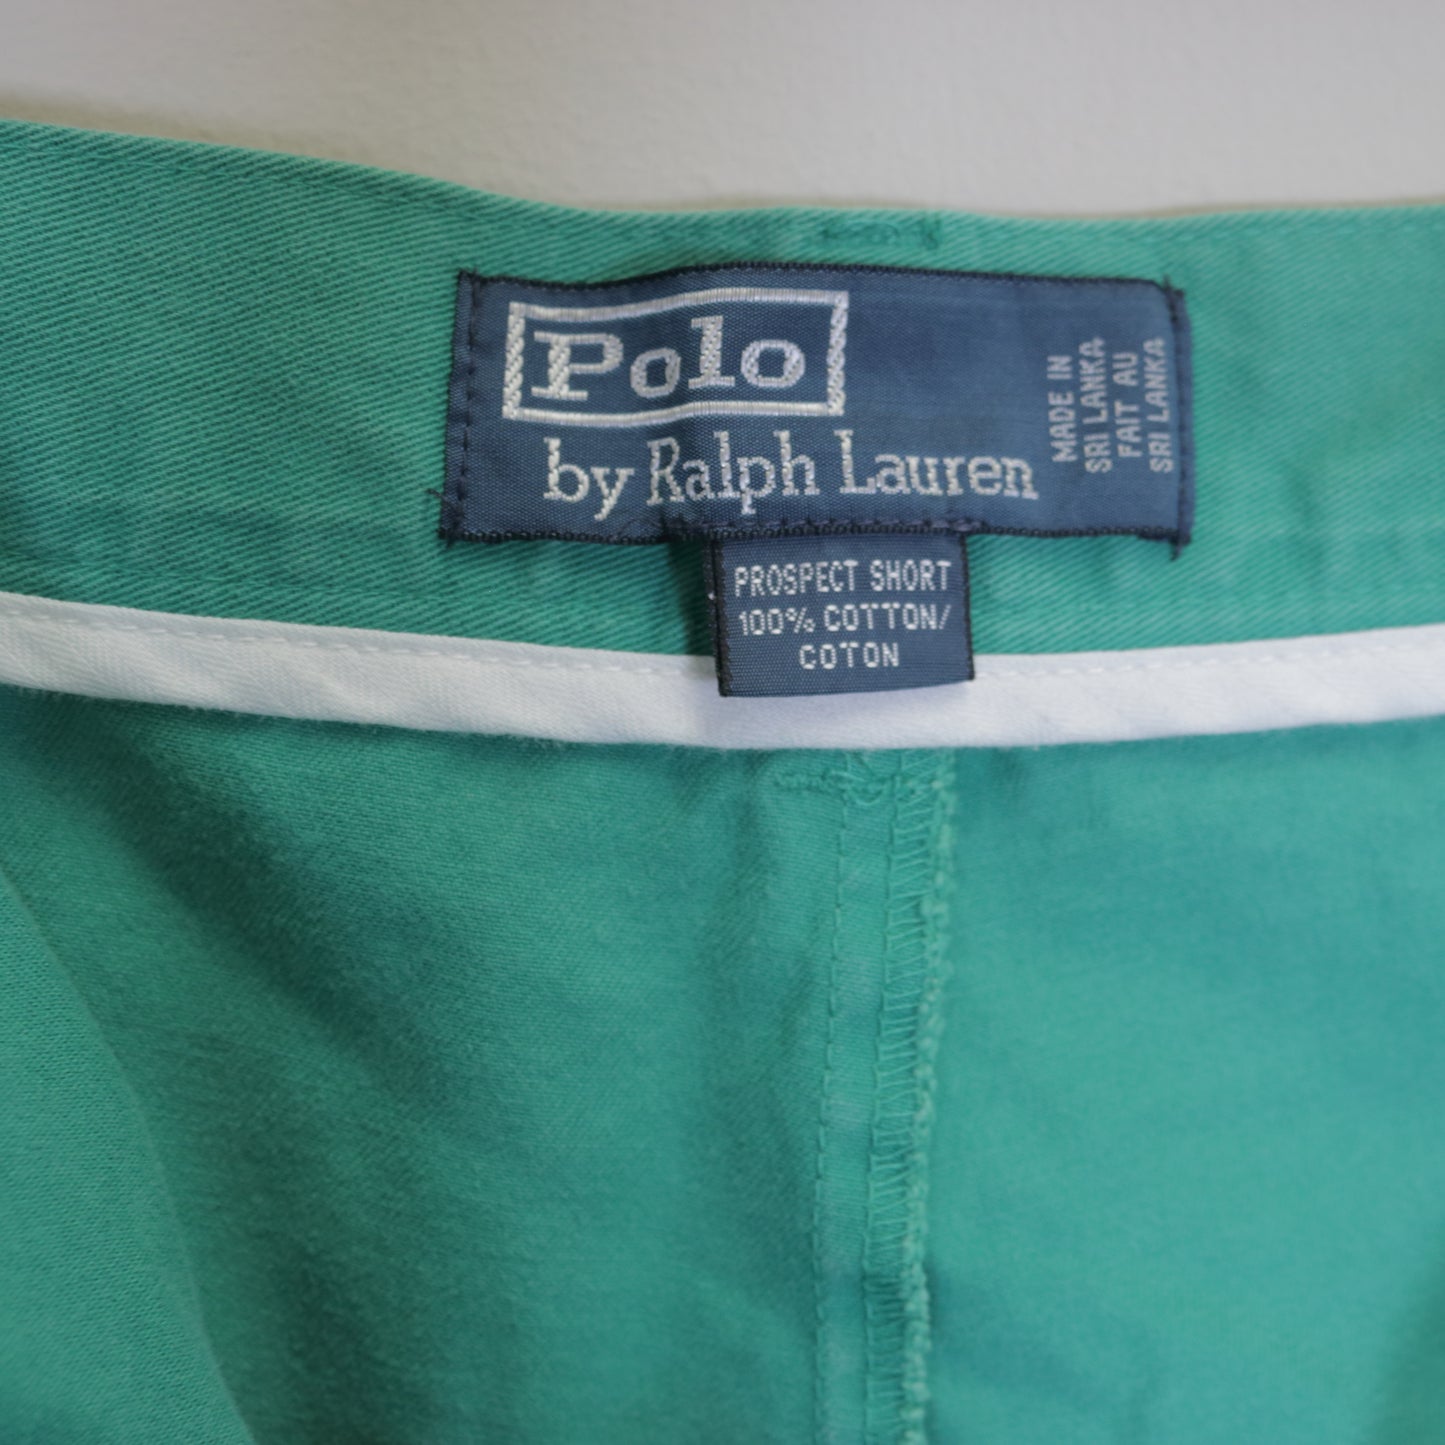 Vintage Polo Ralph Lauren cargo shorts in green. Best fits W42